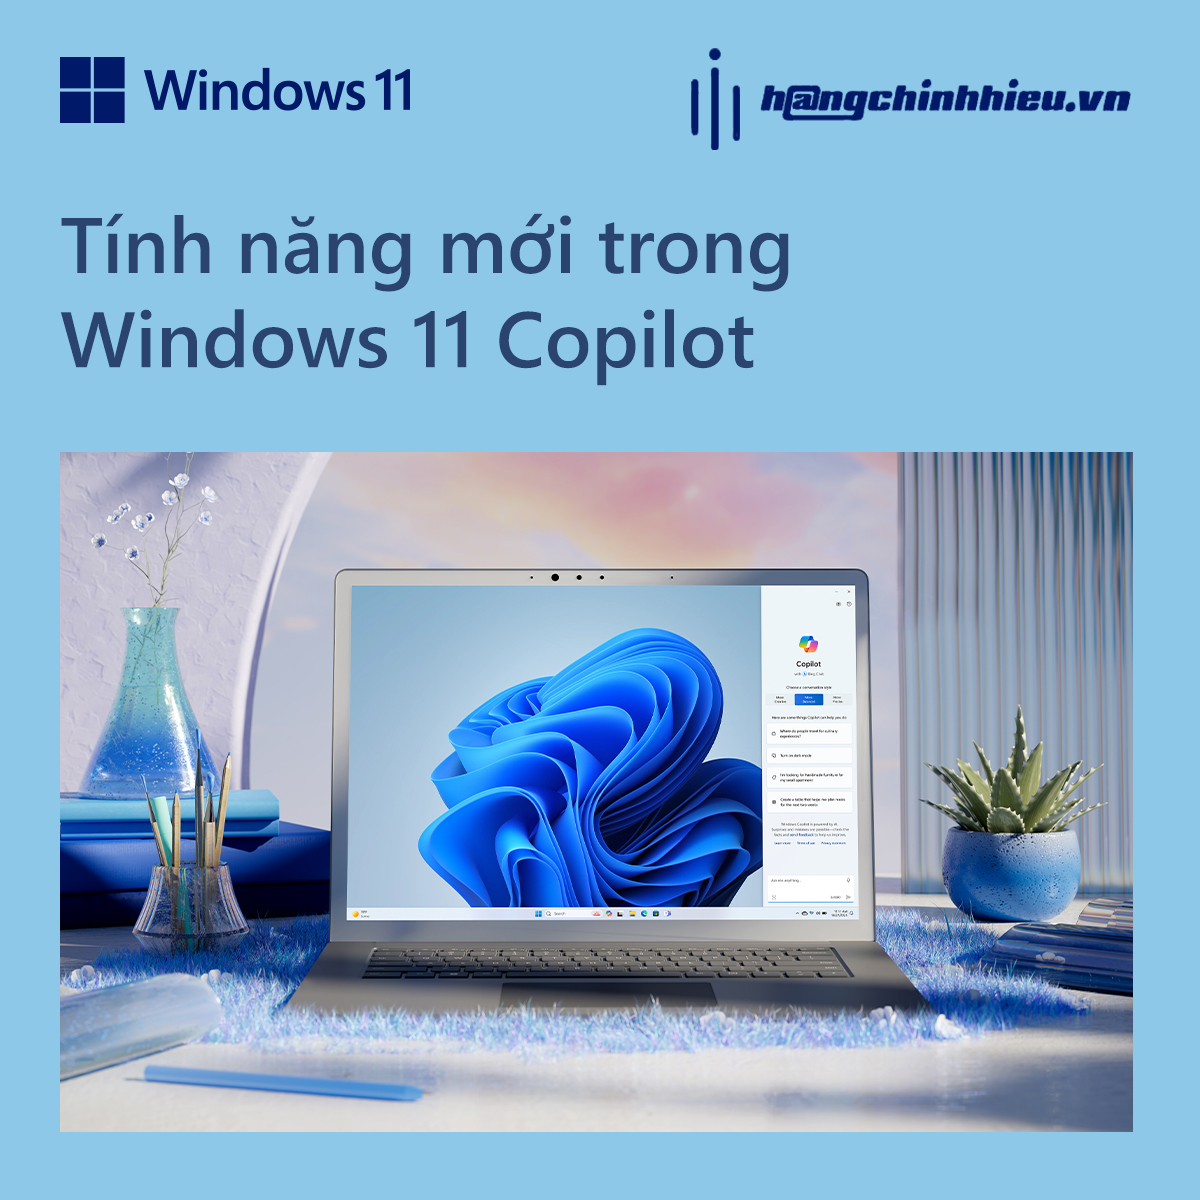 Tính năng mới trong Windows 11 Copilot